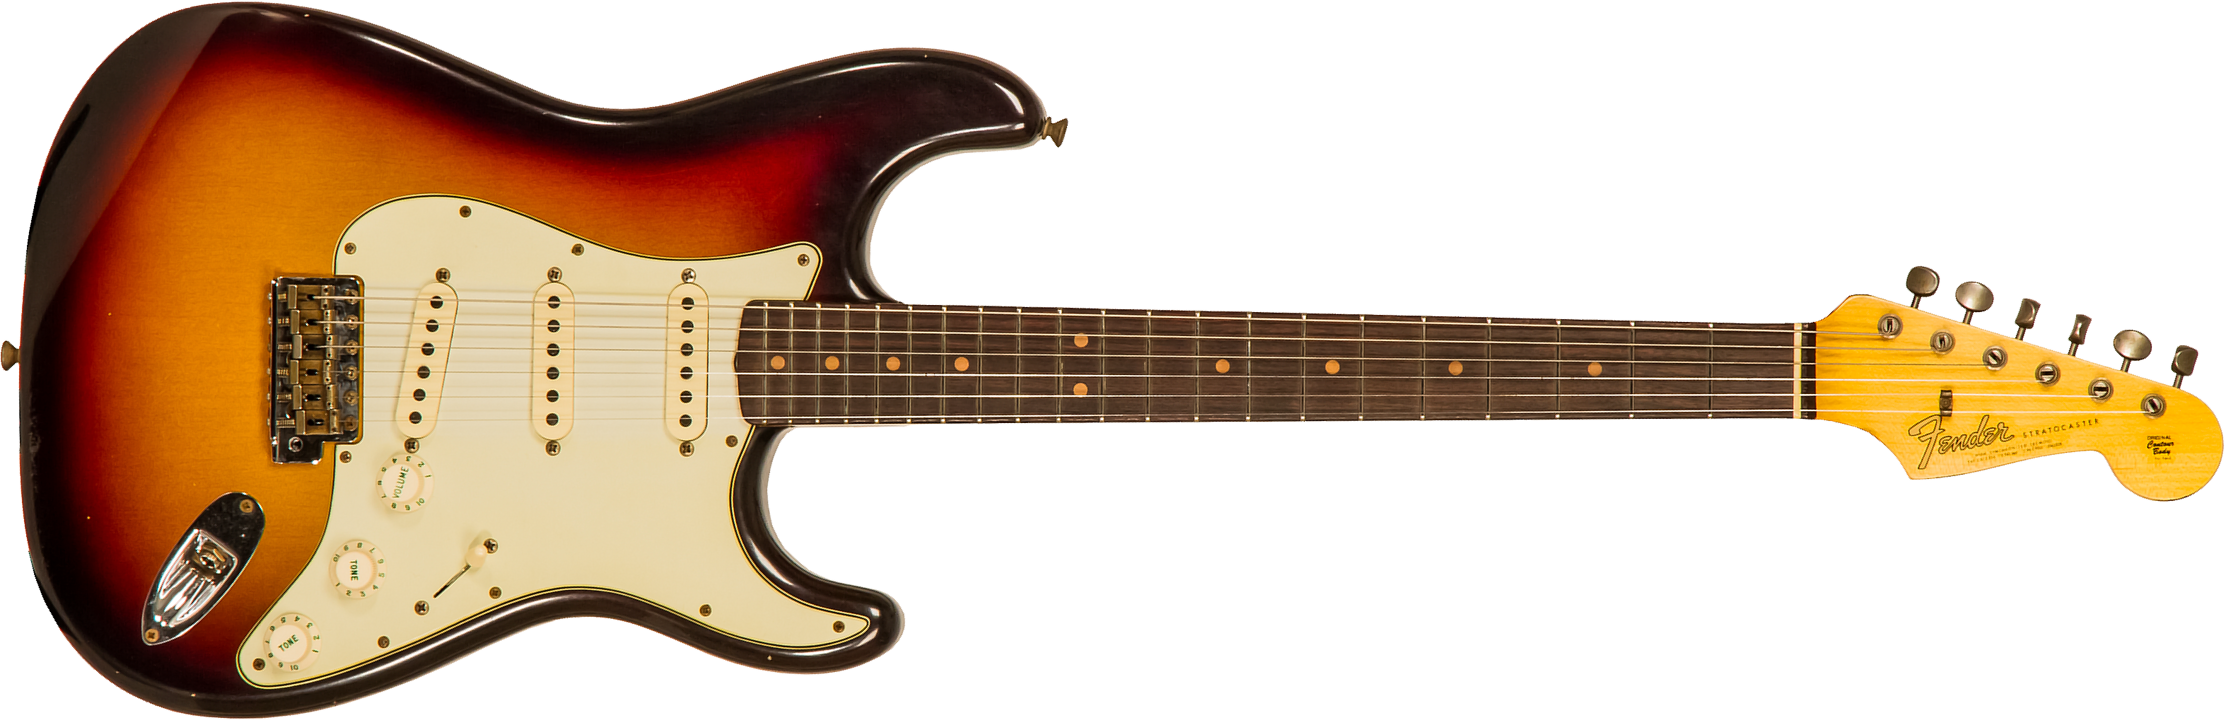 Fender Custom Shop Strat 1964 3s Trem Rw - Journeyman Relic Target 3-color Sunburst - E-Gitarre in Str-Form - Main picture